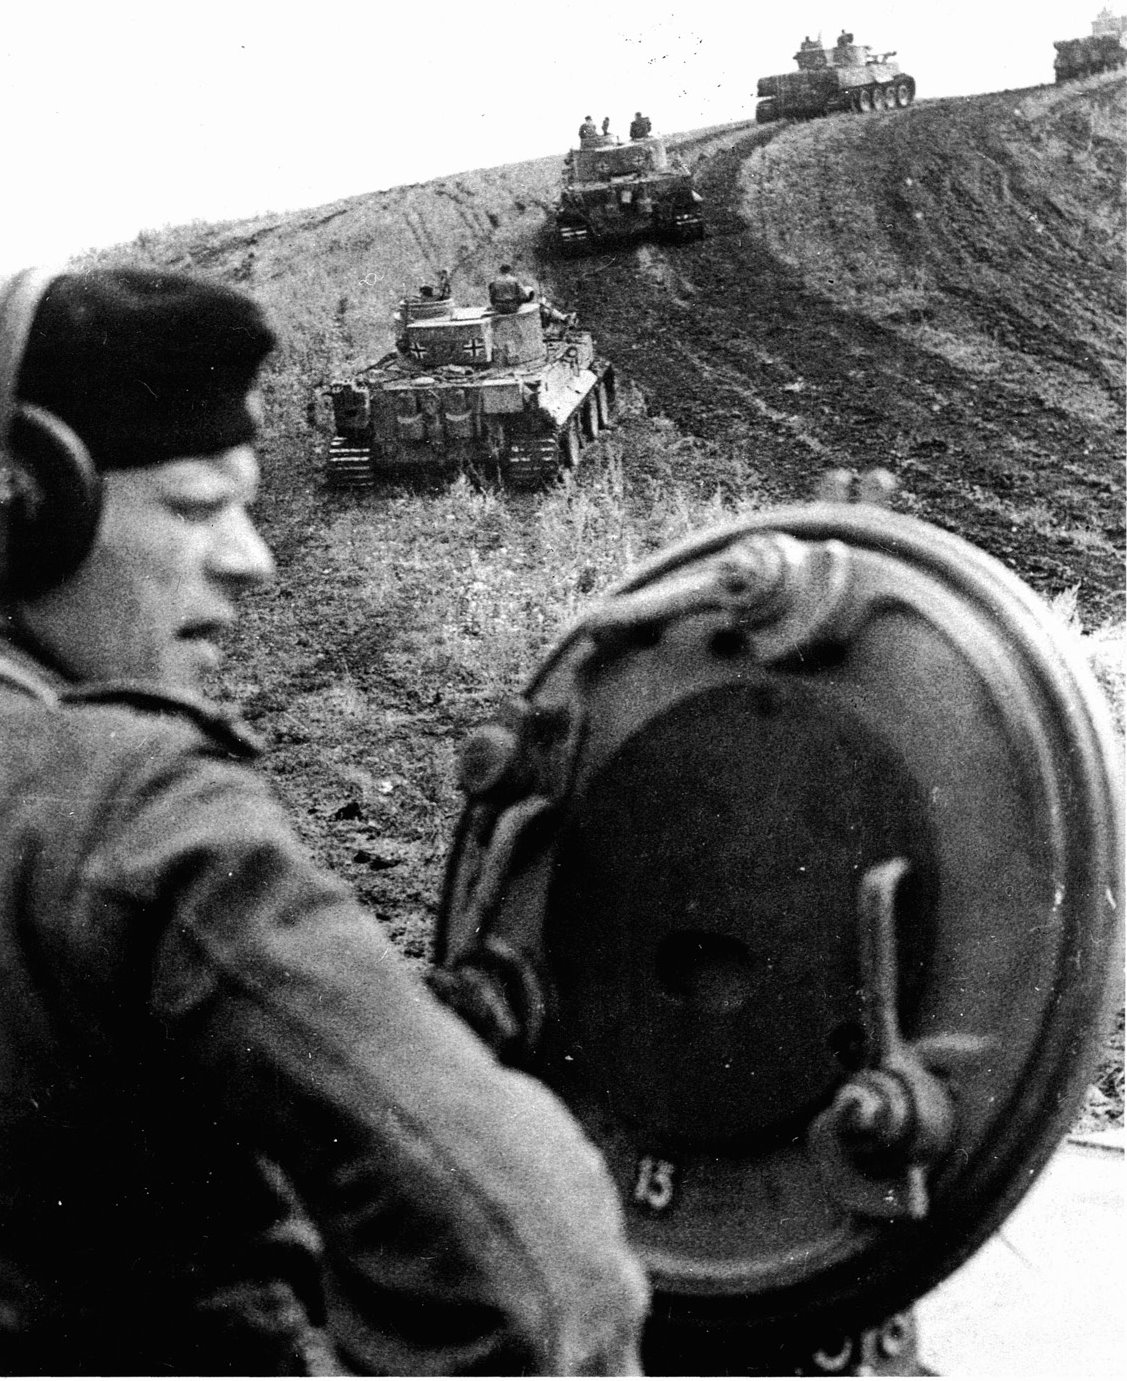 Танк тигр 1943 года. Танк тигр 1943 Курская битва. Немецкие танкисты 1943 Курская дуга. Танк тигр 503 танкового батальона. Курская дуга битва.